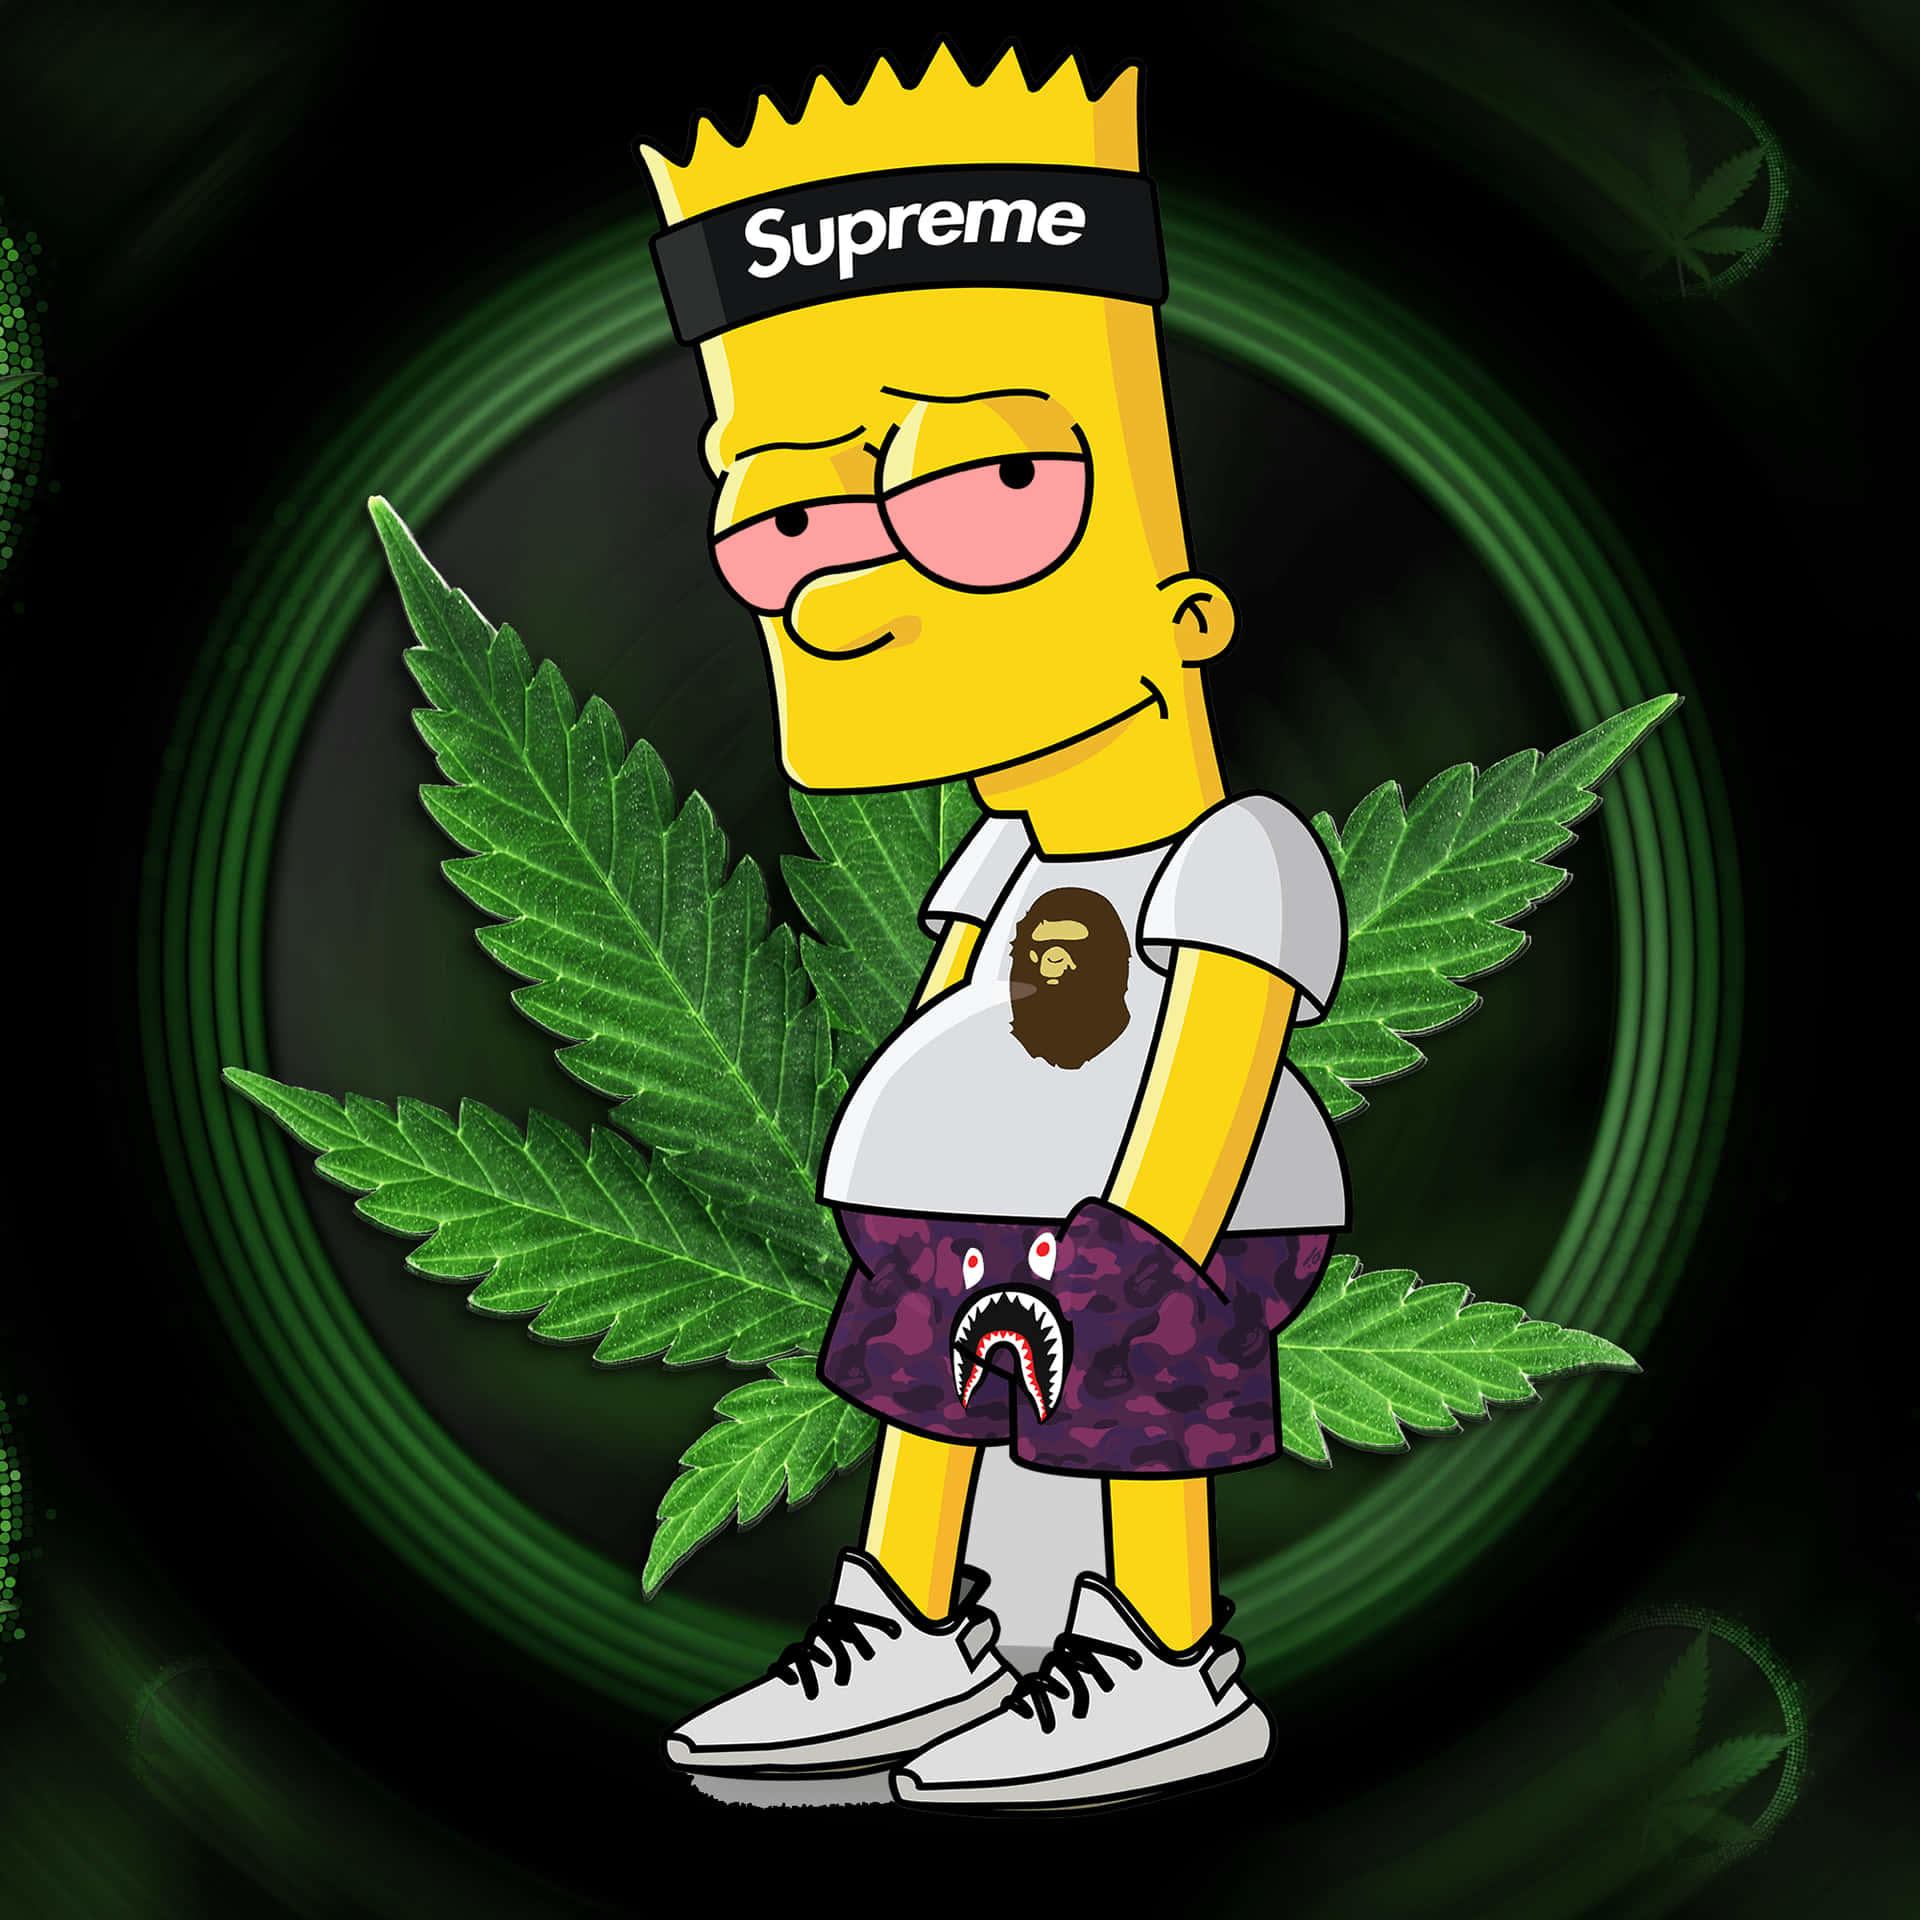 Free Bart Simpson Weed Wallpaper Downloads, [100+] Bart Simpson Weed  Wallpapers for FREE 